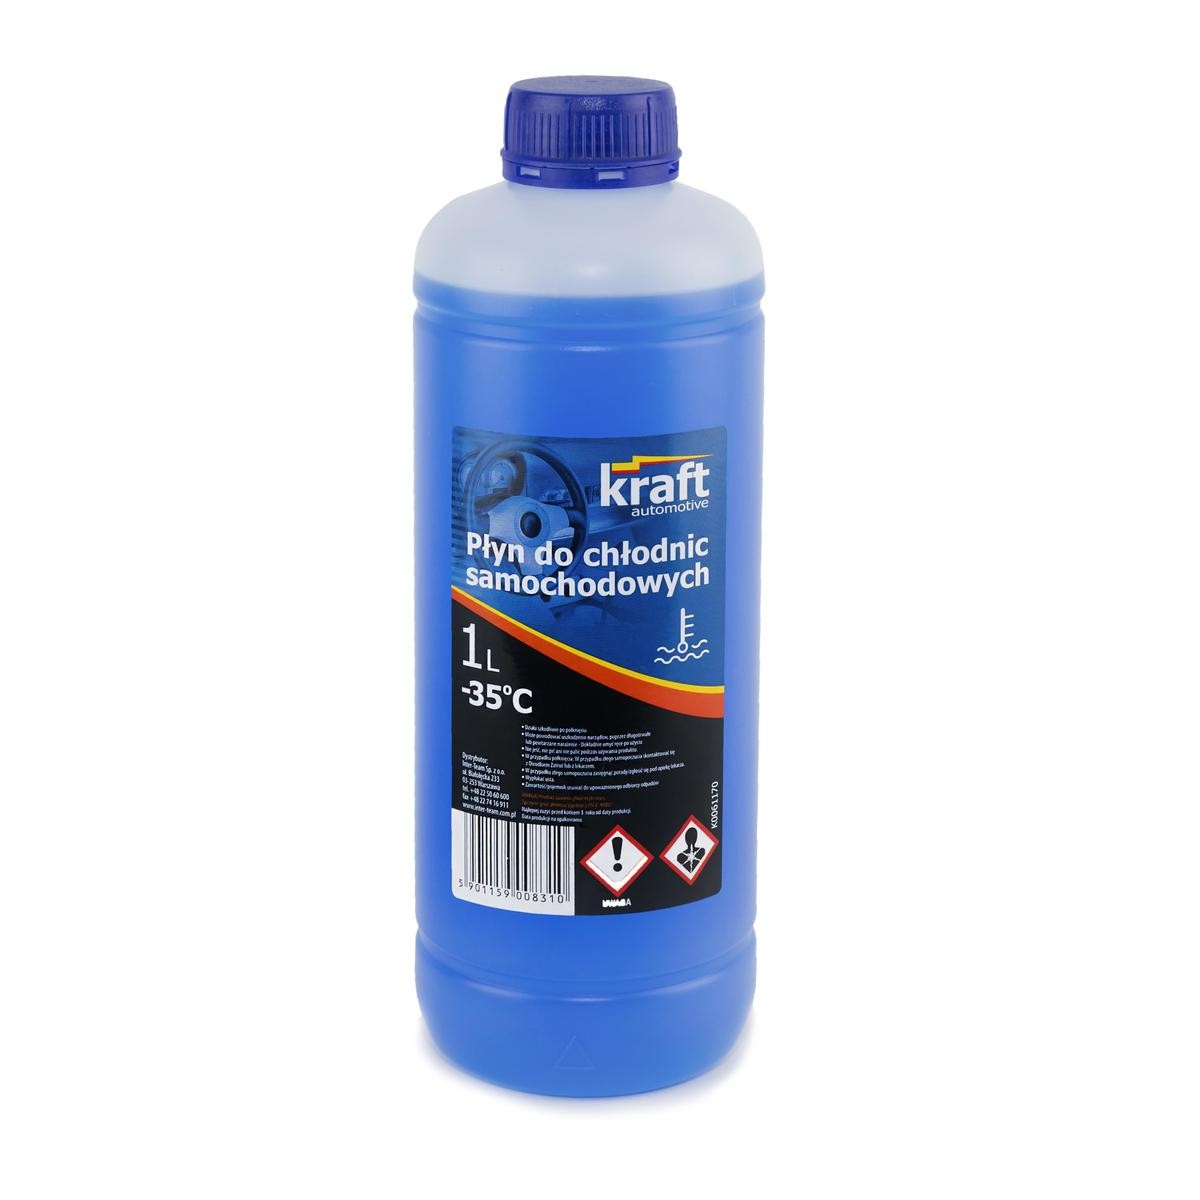 TRIUMPH BONNEVILLE Kühlmittel G11, ASTM D3306-03 Blau, 1l KRAFT G11 K0061170